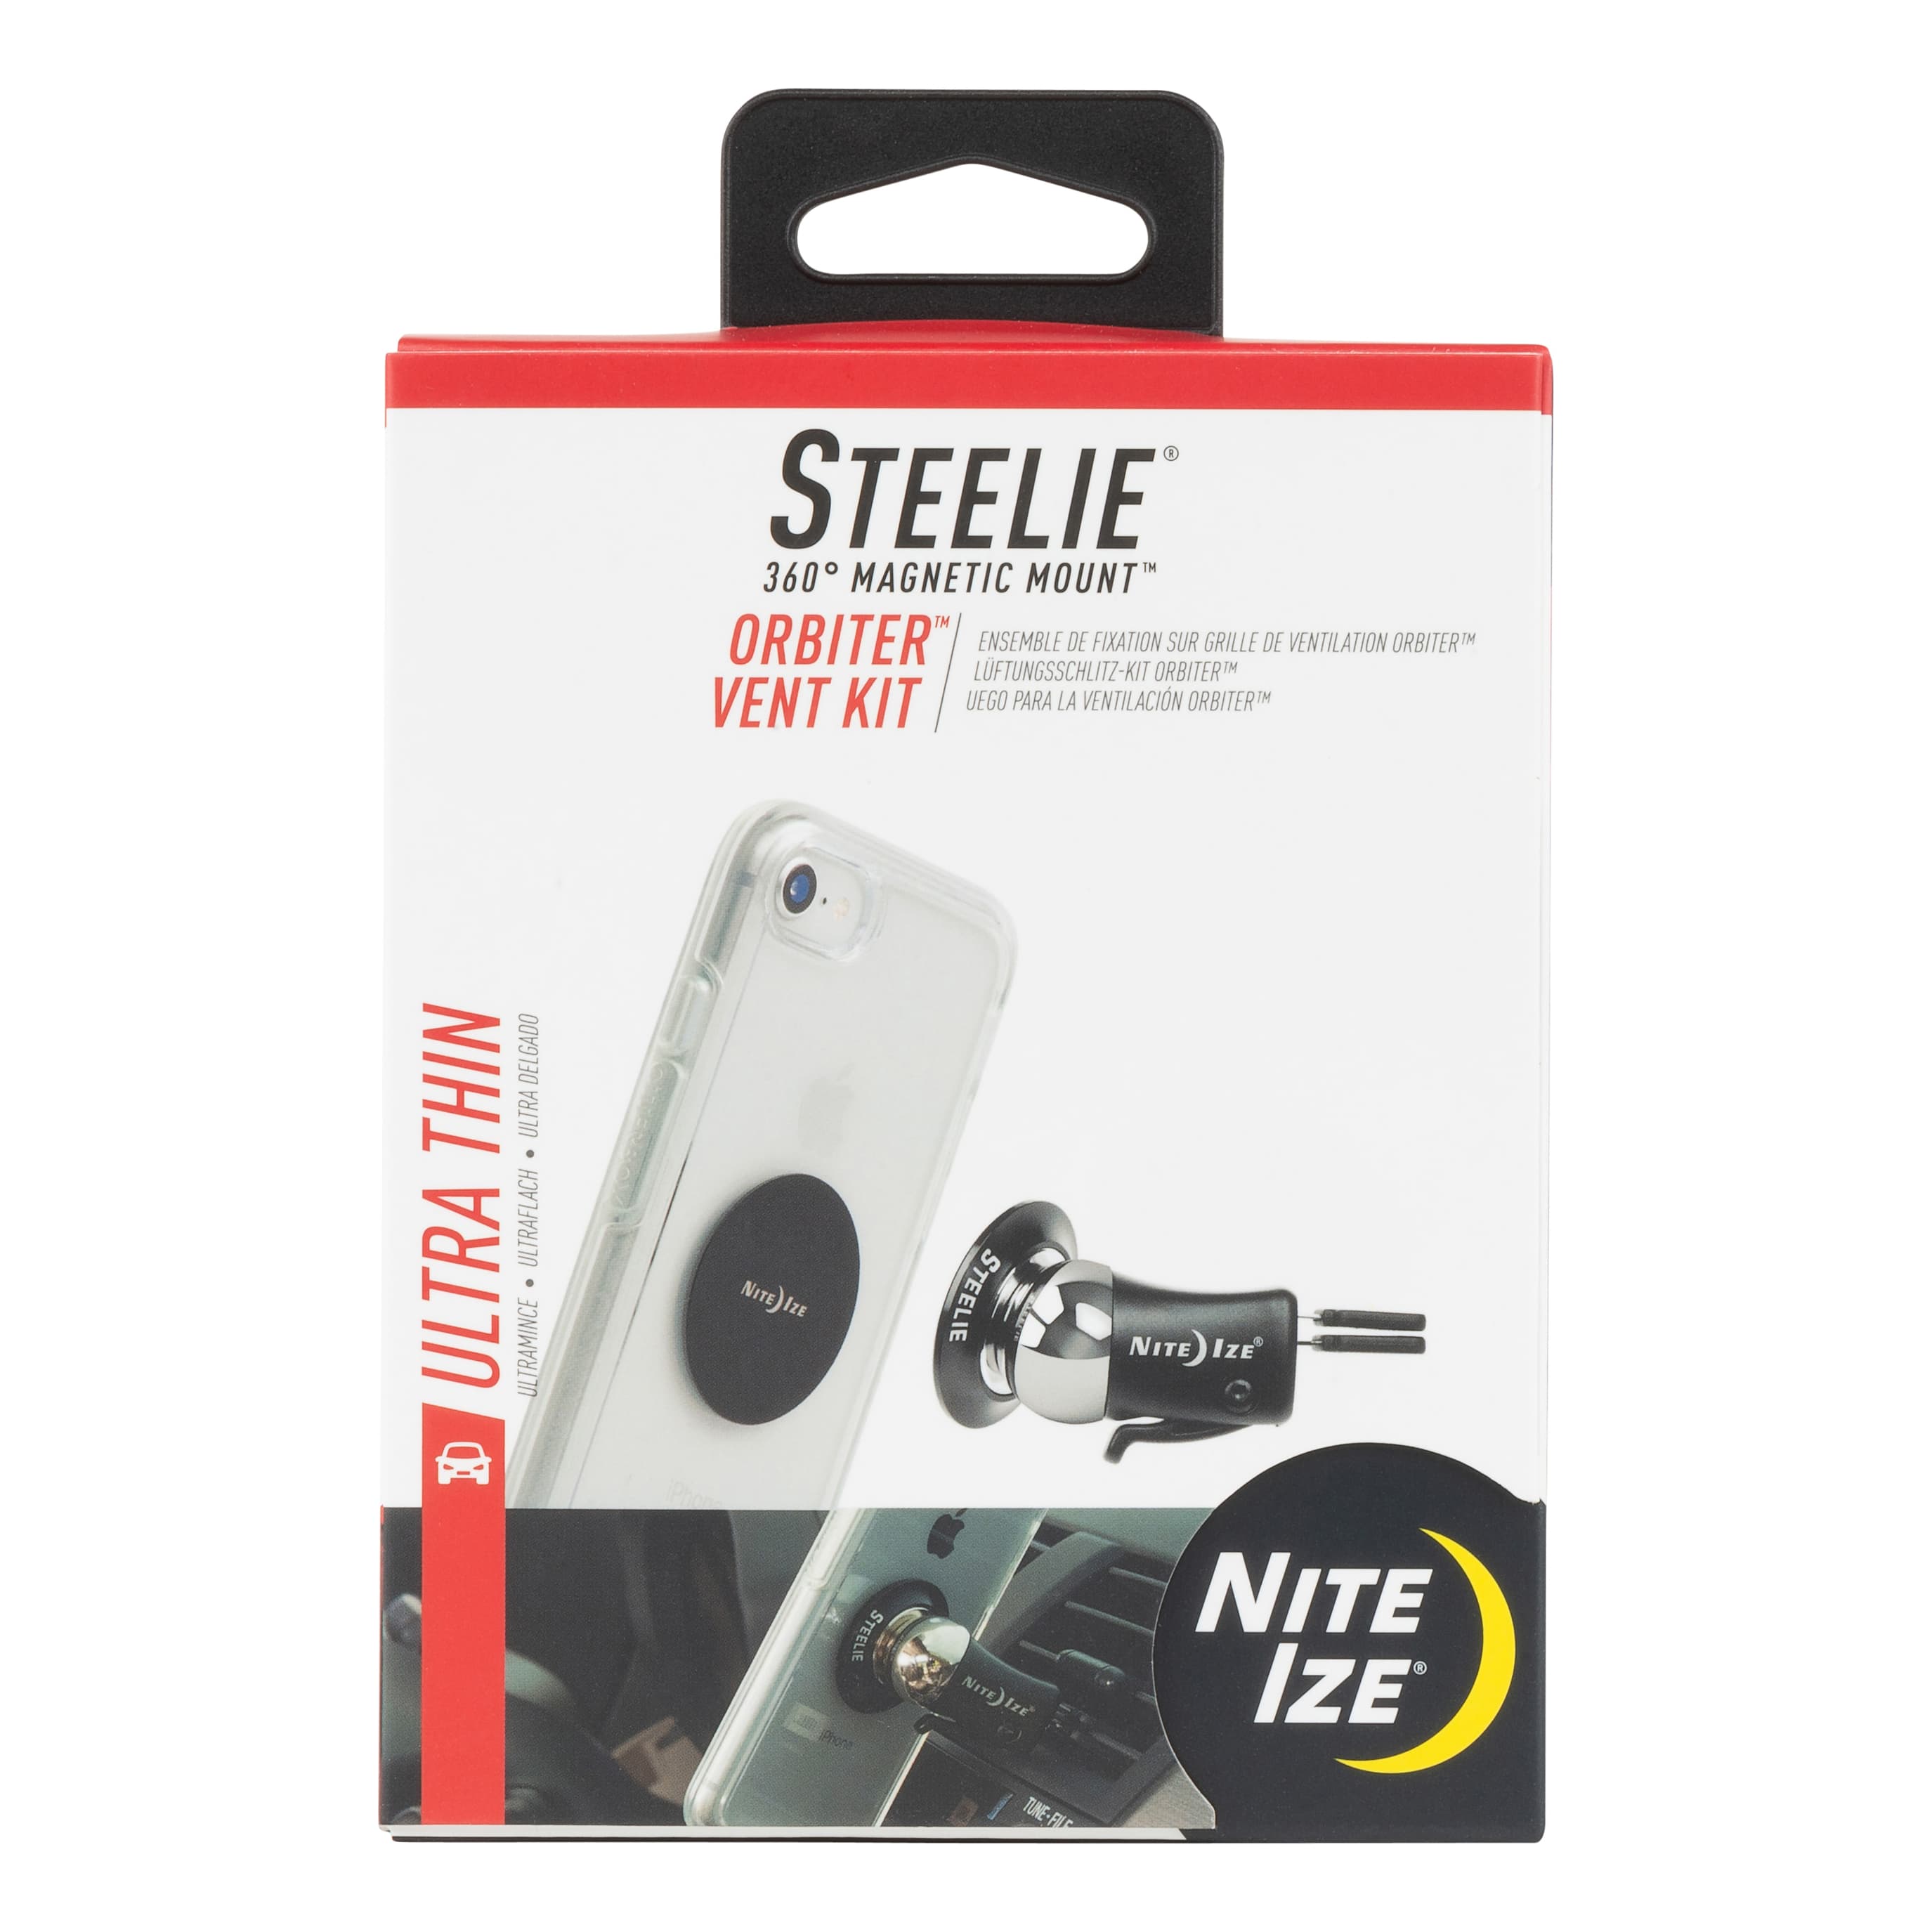 Nite Ize® Steelie® Orbiter™ Vent Kit - Package View